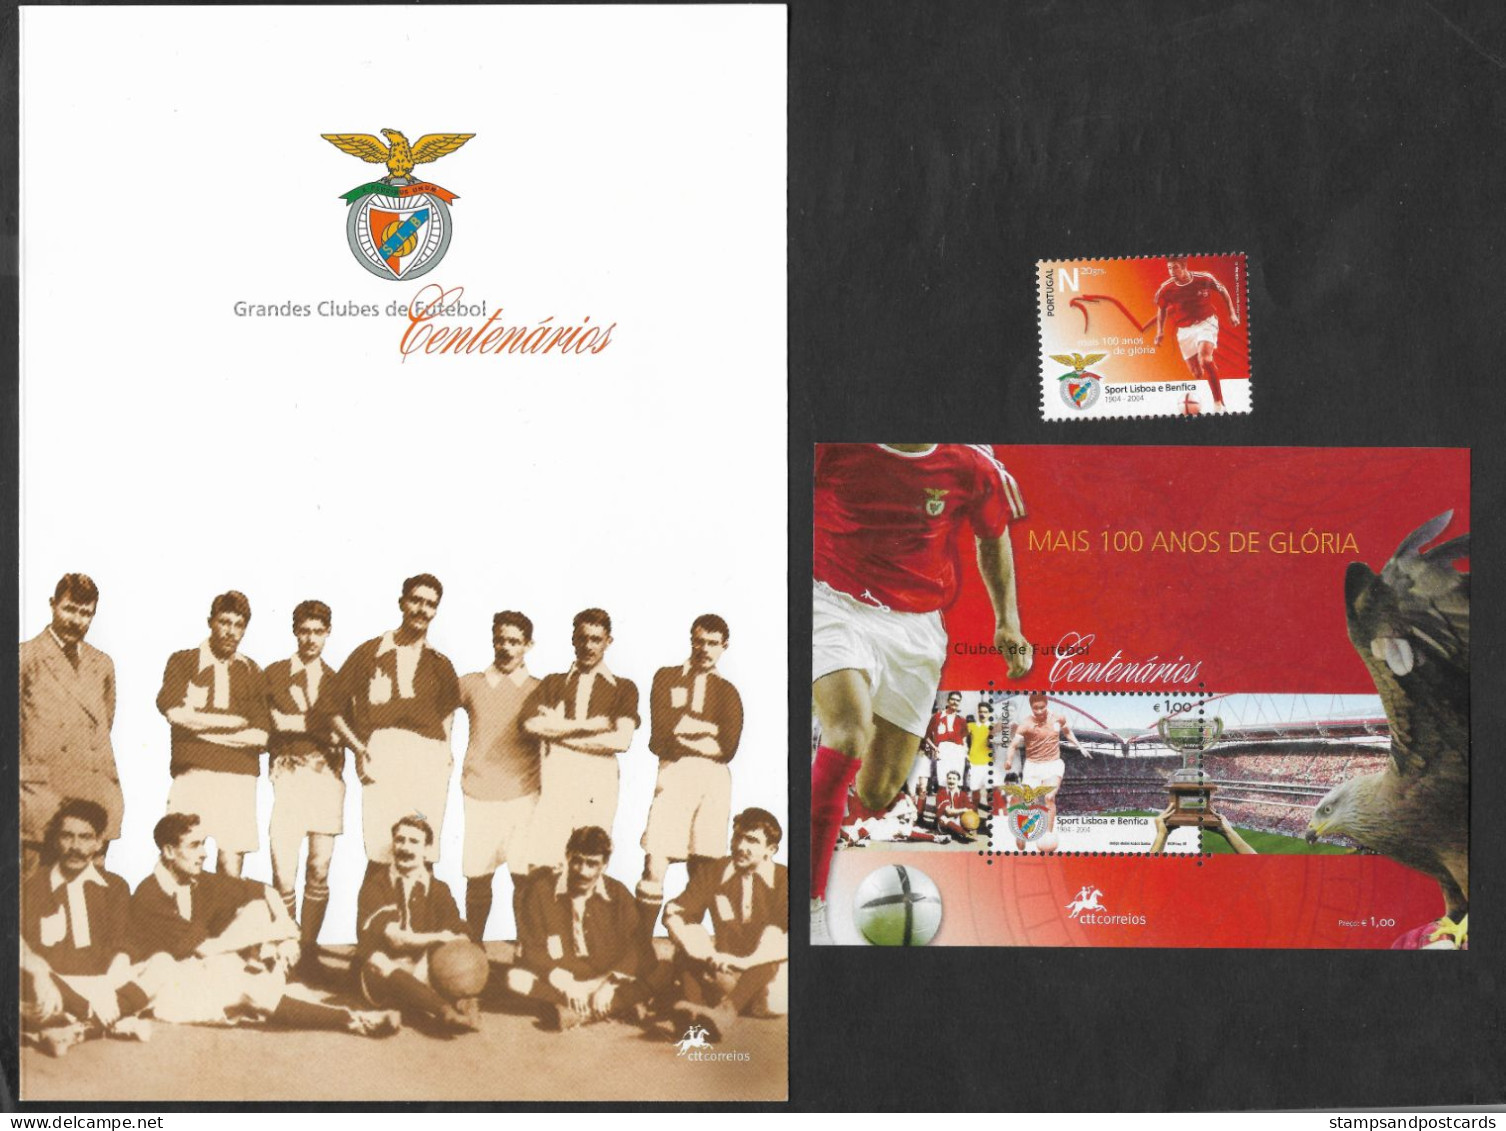 Portugal SLB Benfica Club De Football Clubs Centenaires 2005 Brochure + Timbre + Bloc Soccer Sport Lisboa E Benfica - Famous Clubs